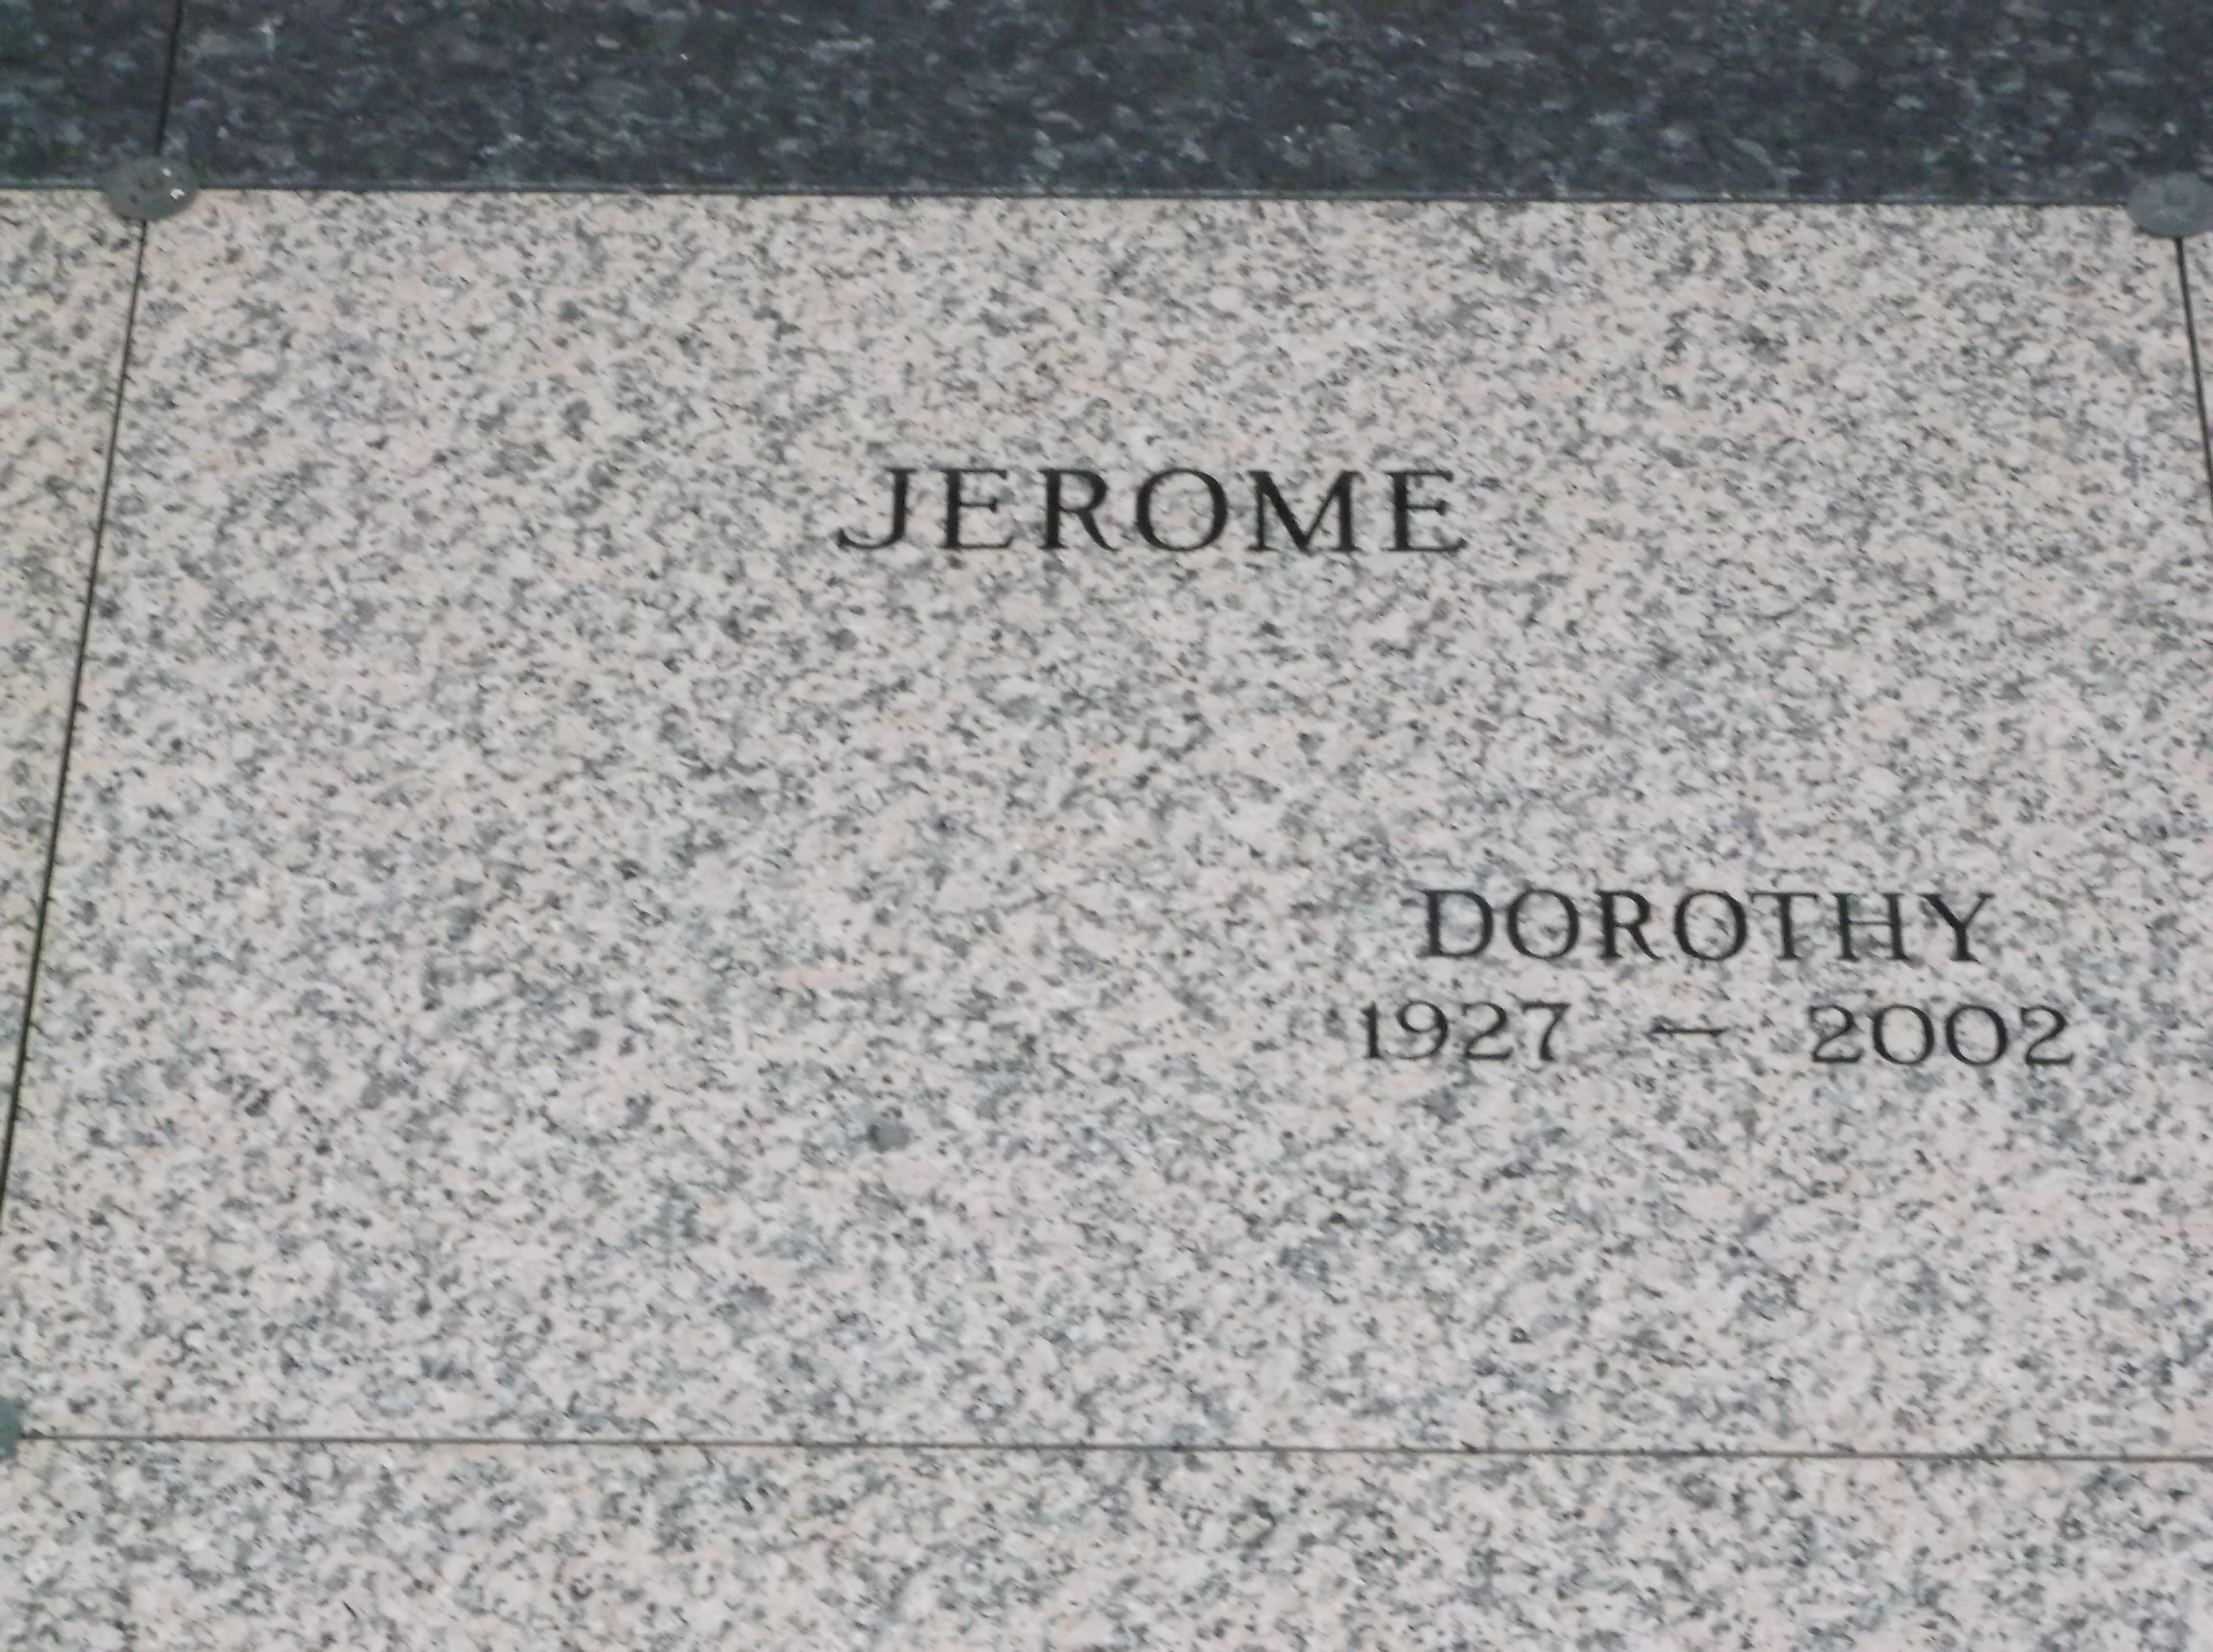 Dorothy Jerome